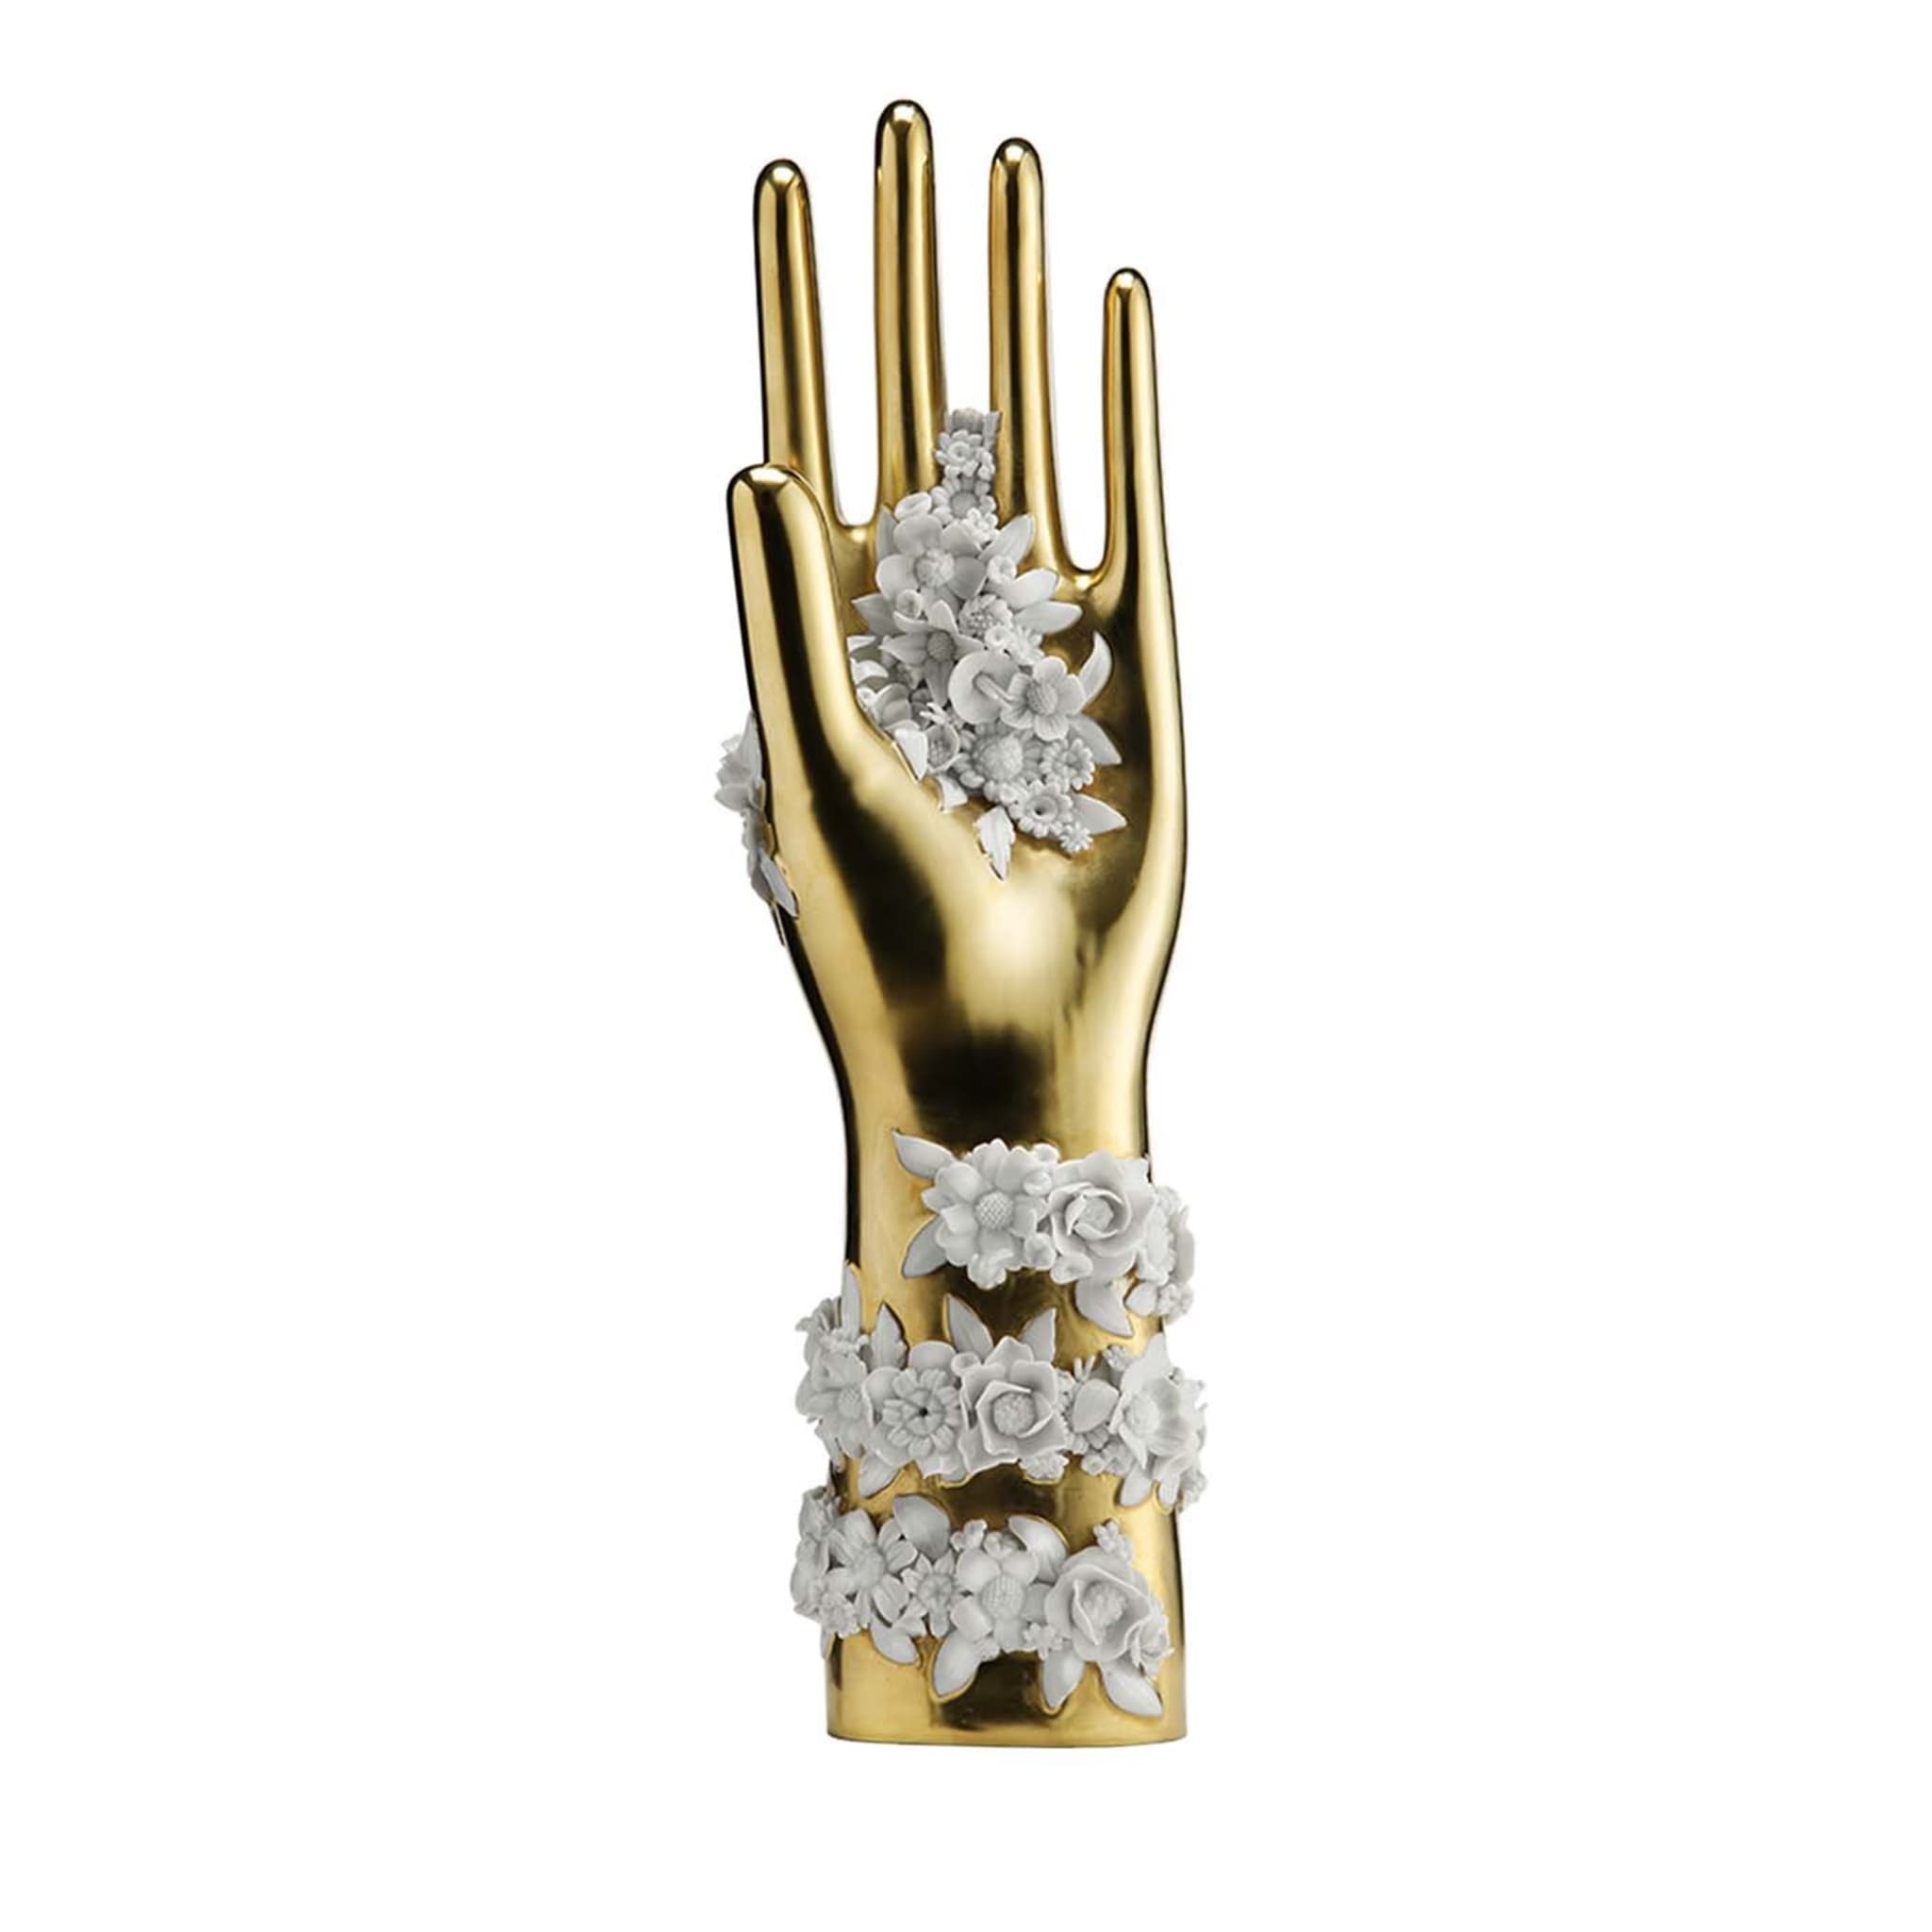 Mano Fiorata Decorative Gold Hand - Limited Edition by Gio Ponti - Main view